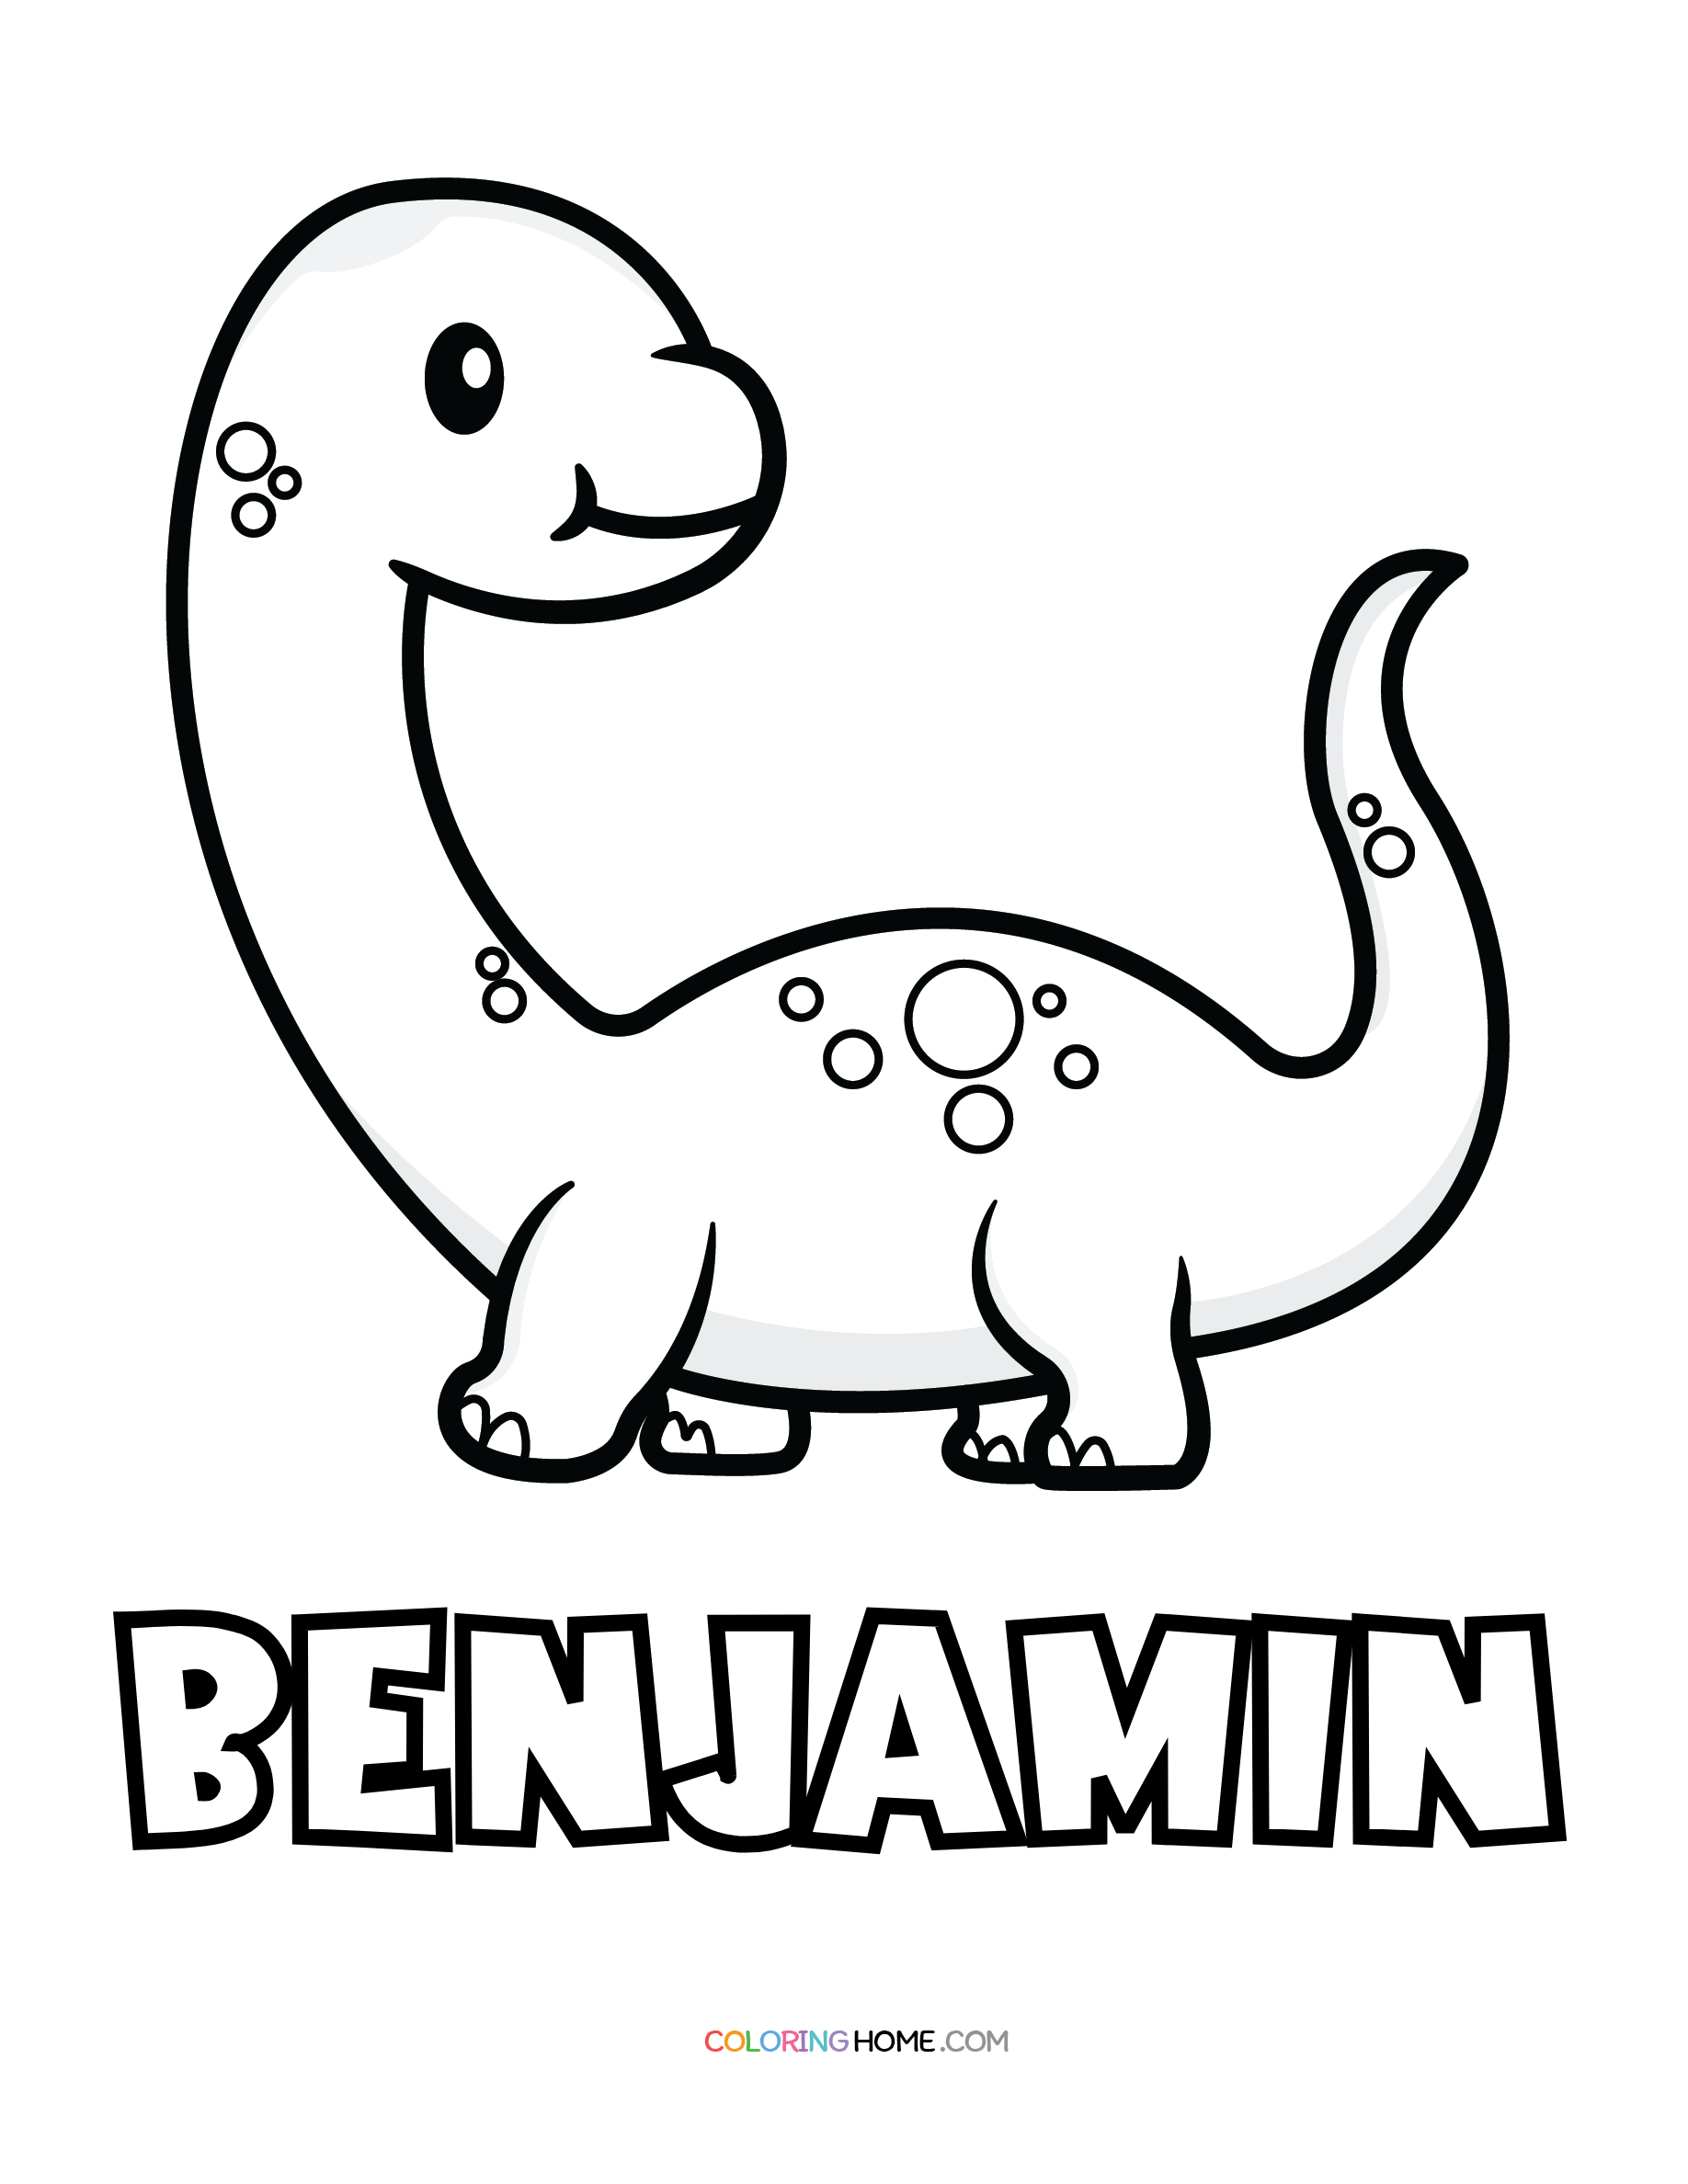 Benjamin dinosaur coloring page